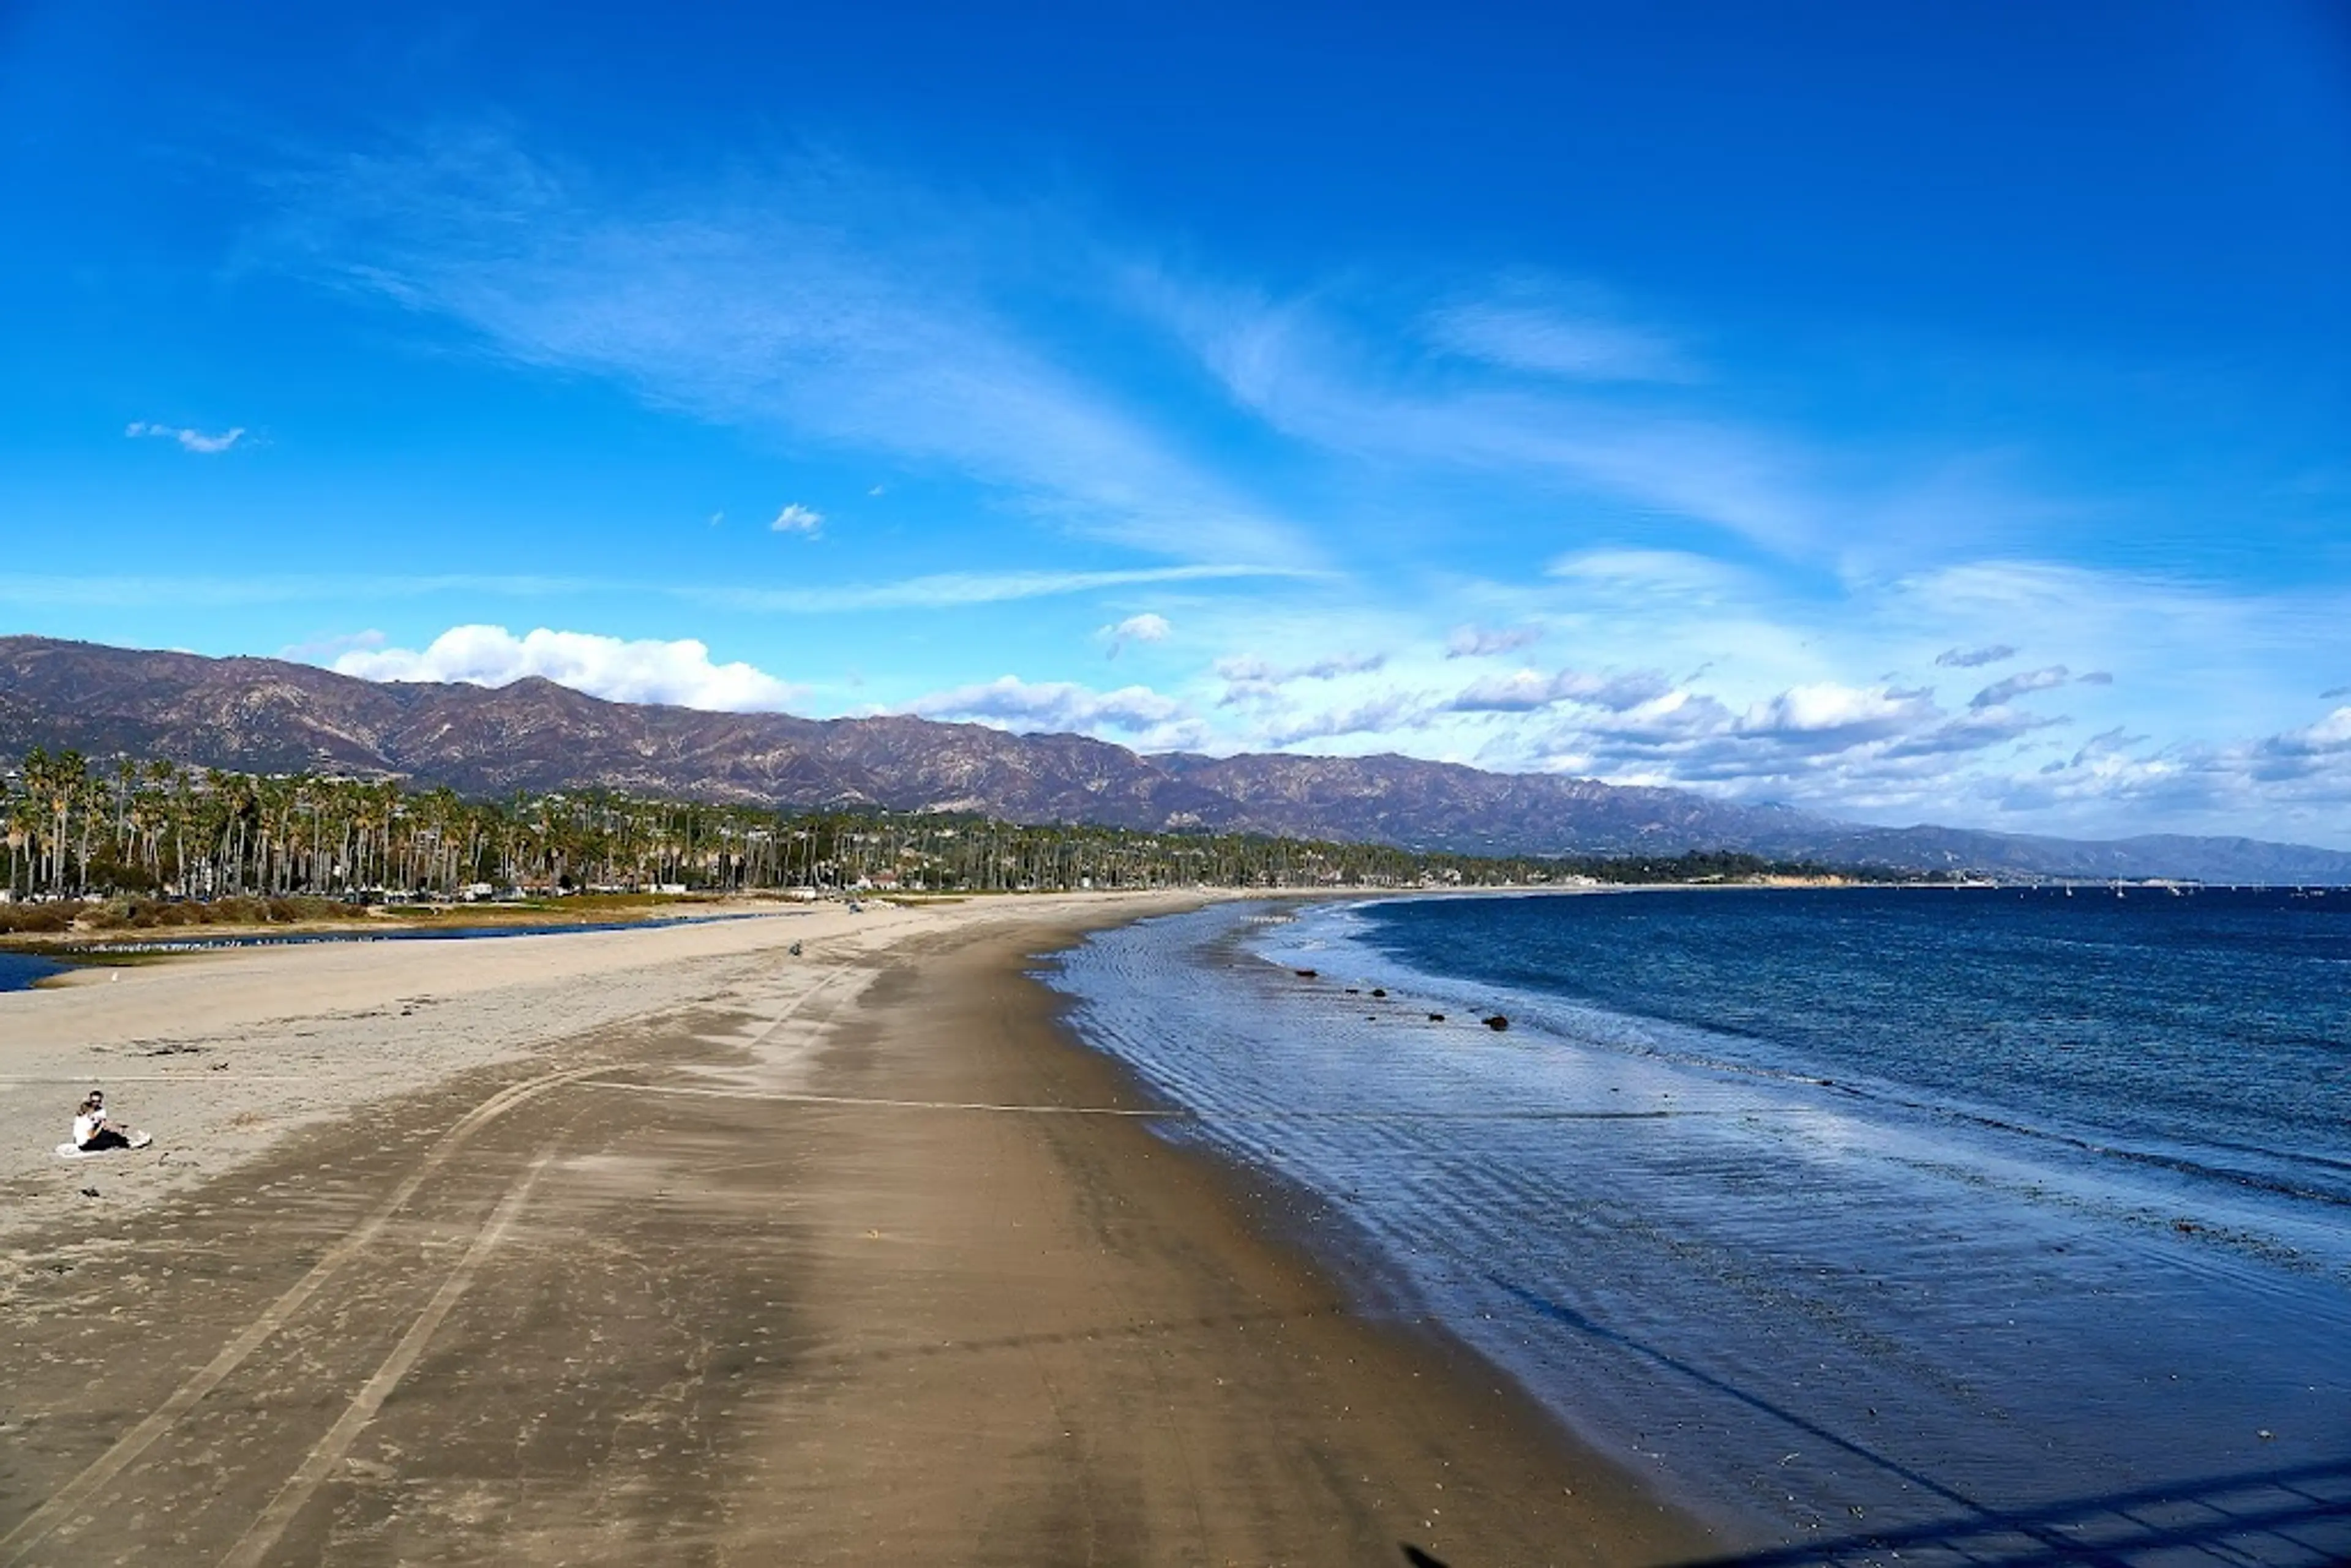 Santa Barbara's beaches